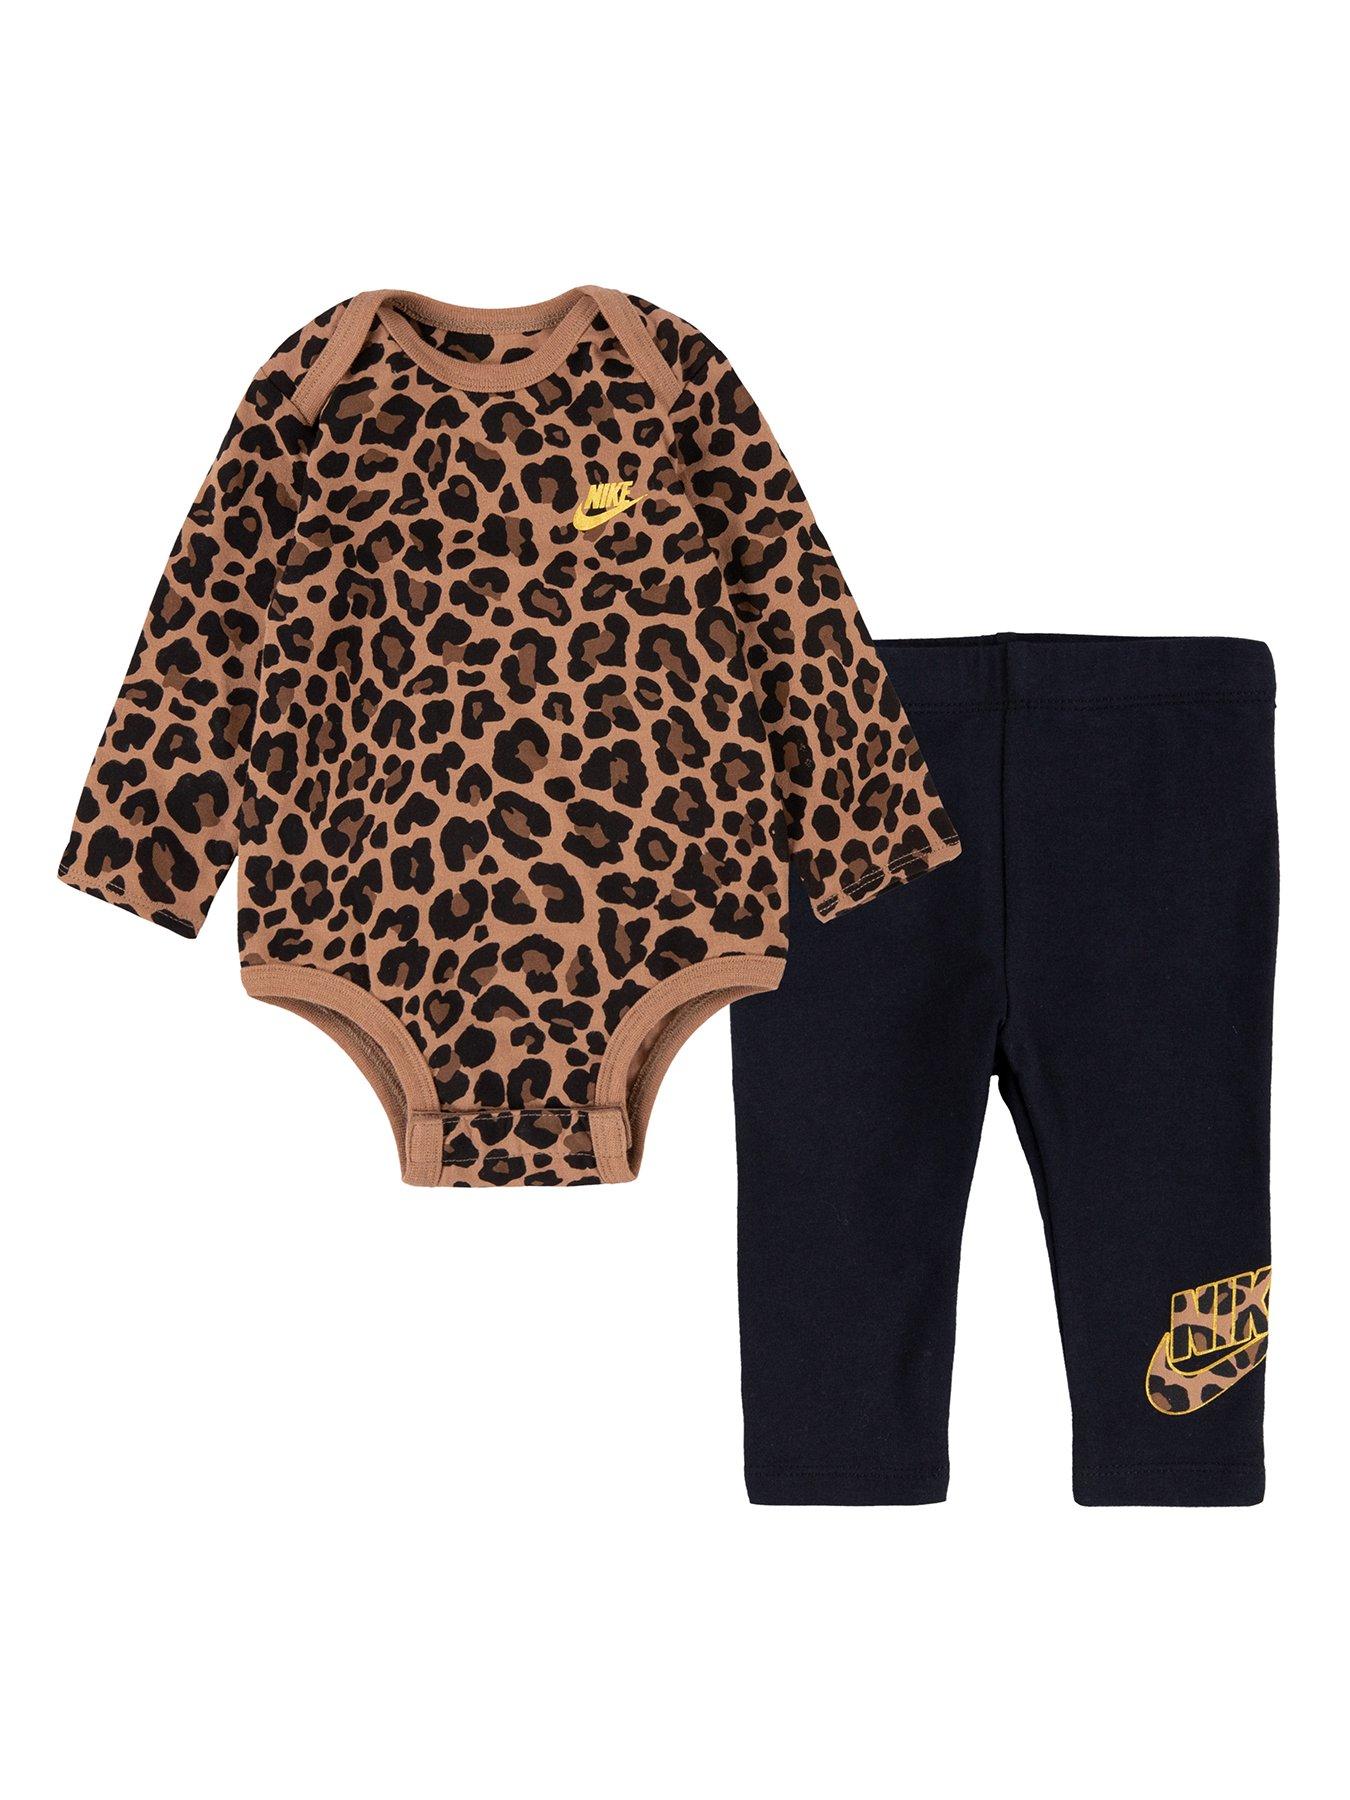 Kids Leopard Futura Bodysuit Pant Set - Black/Gold